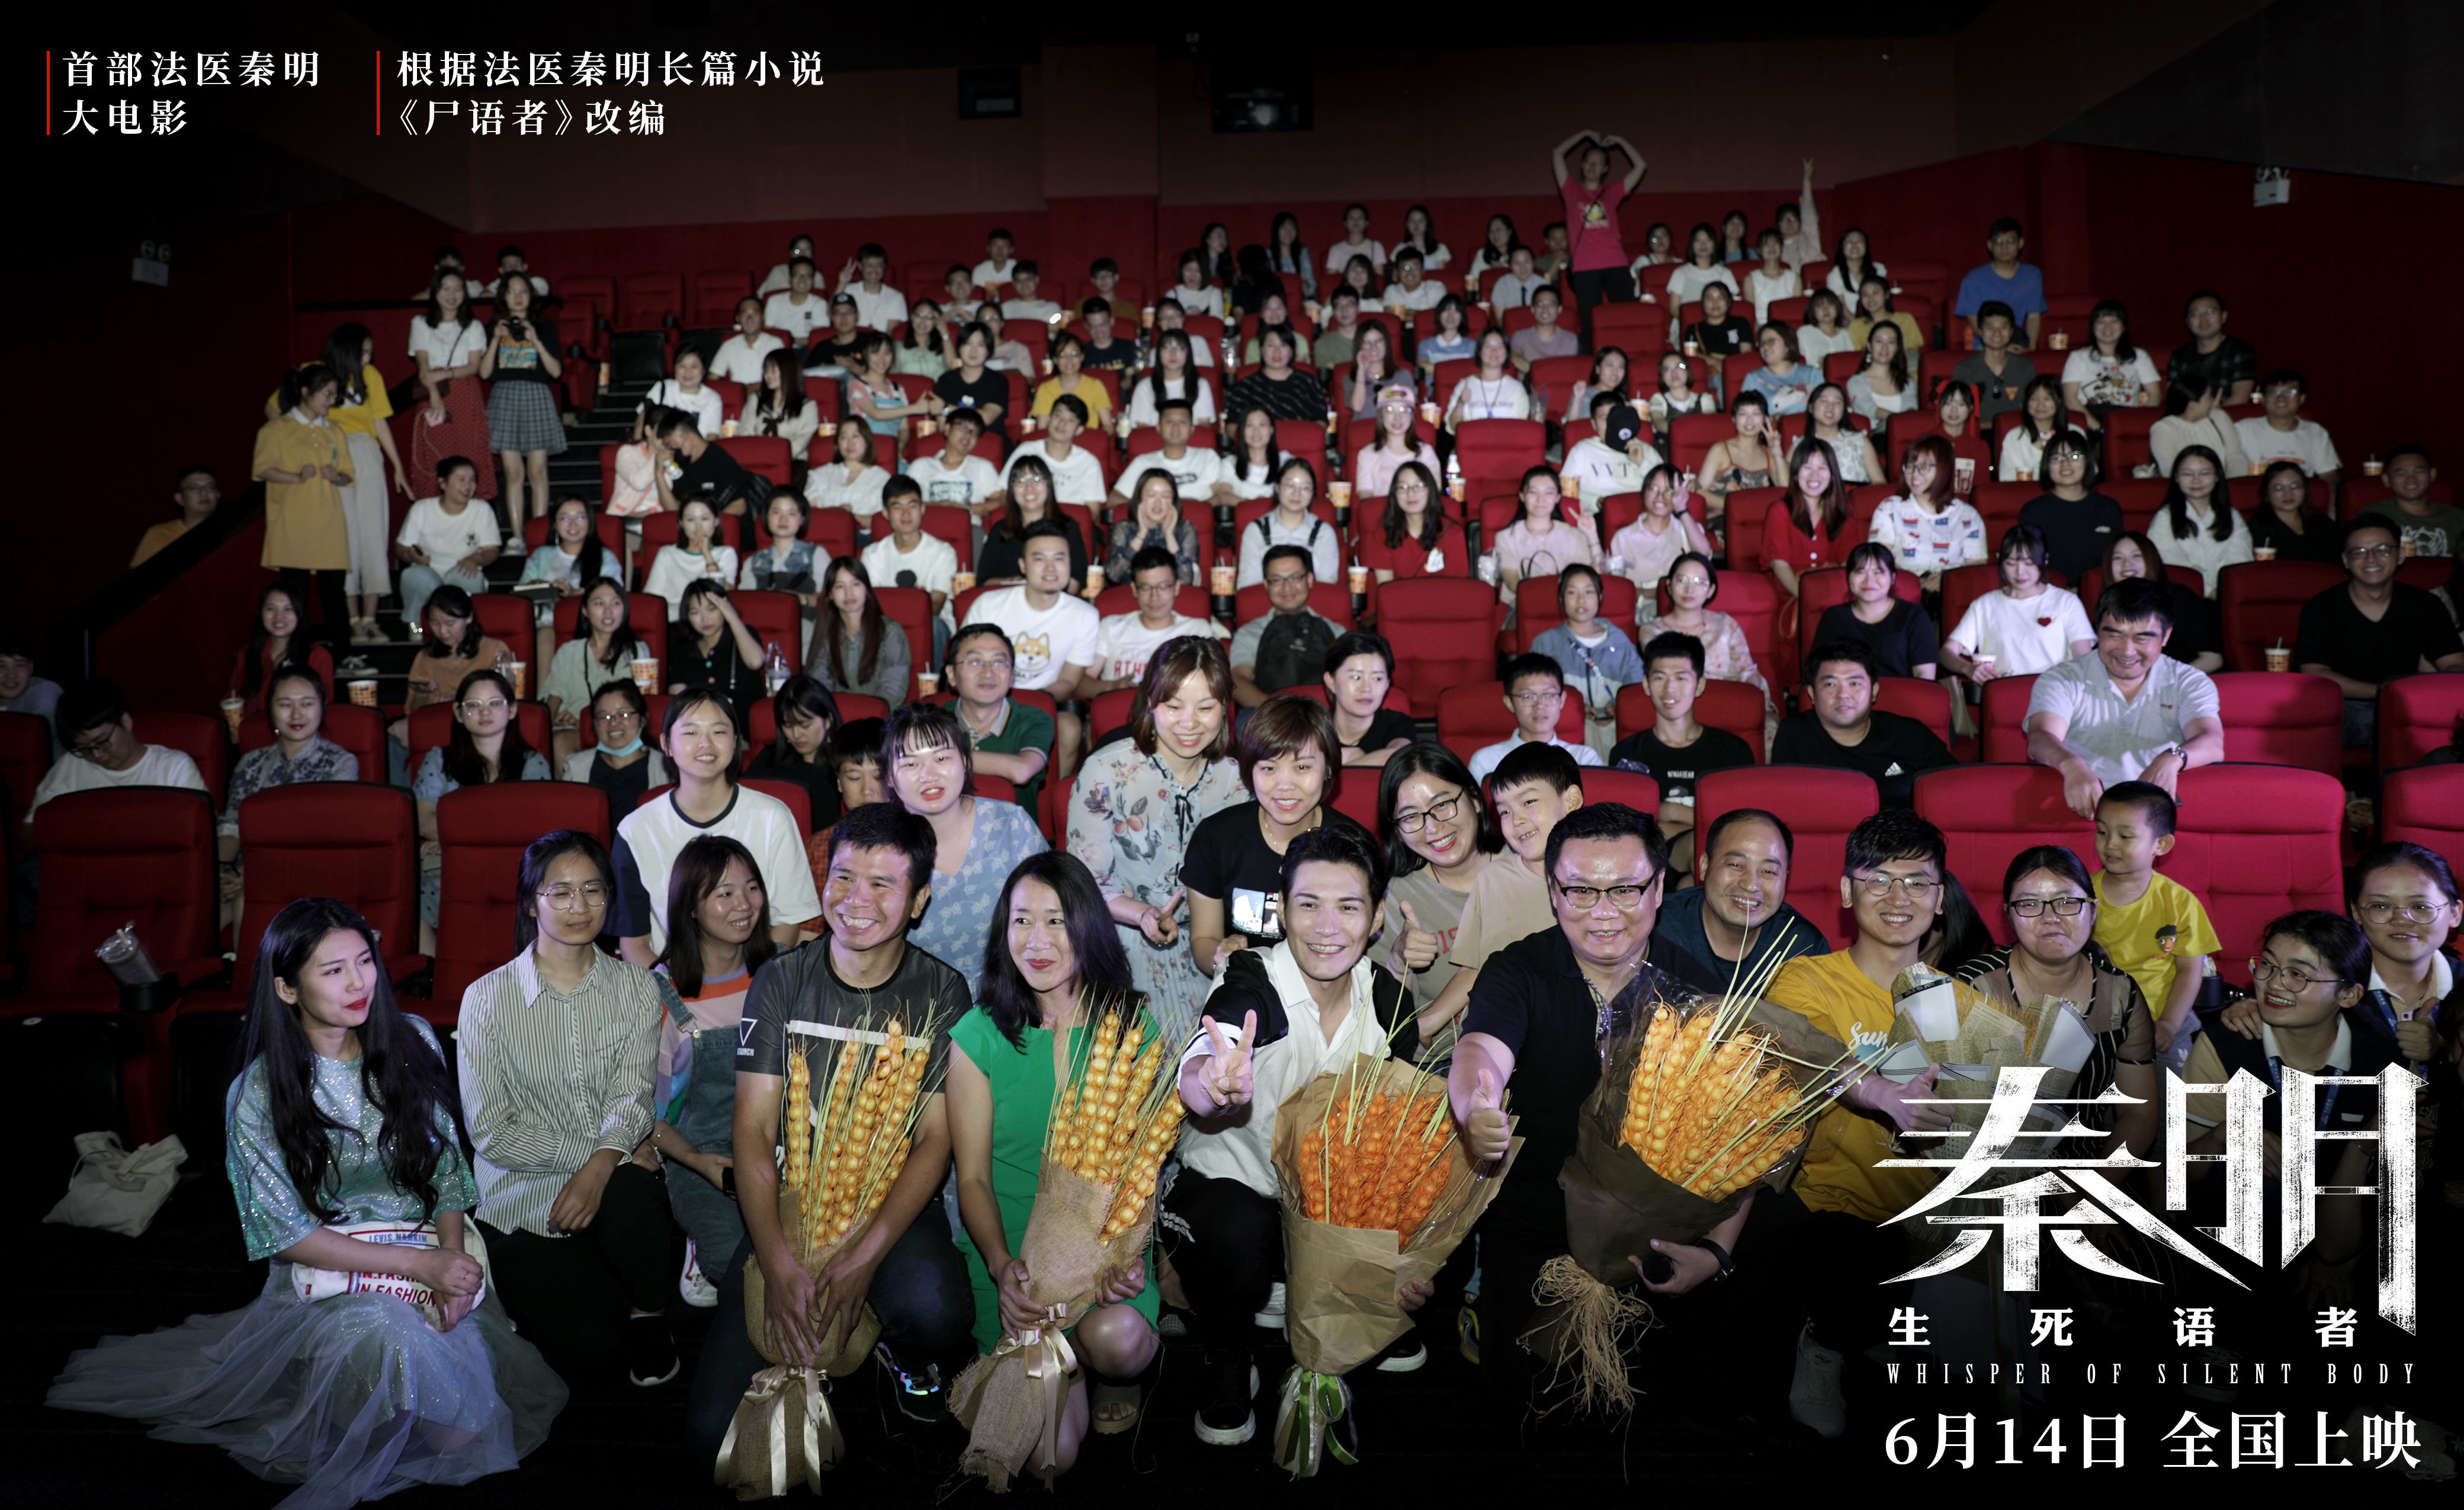 《  qin ming ·生死语者 》首场观影人气火爆  原著作者秦明赞电影品质严重超预期